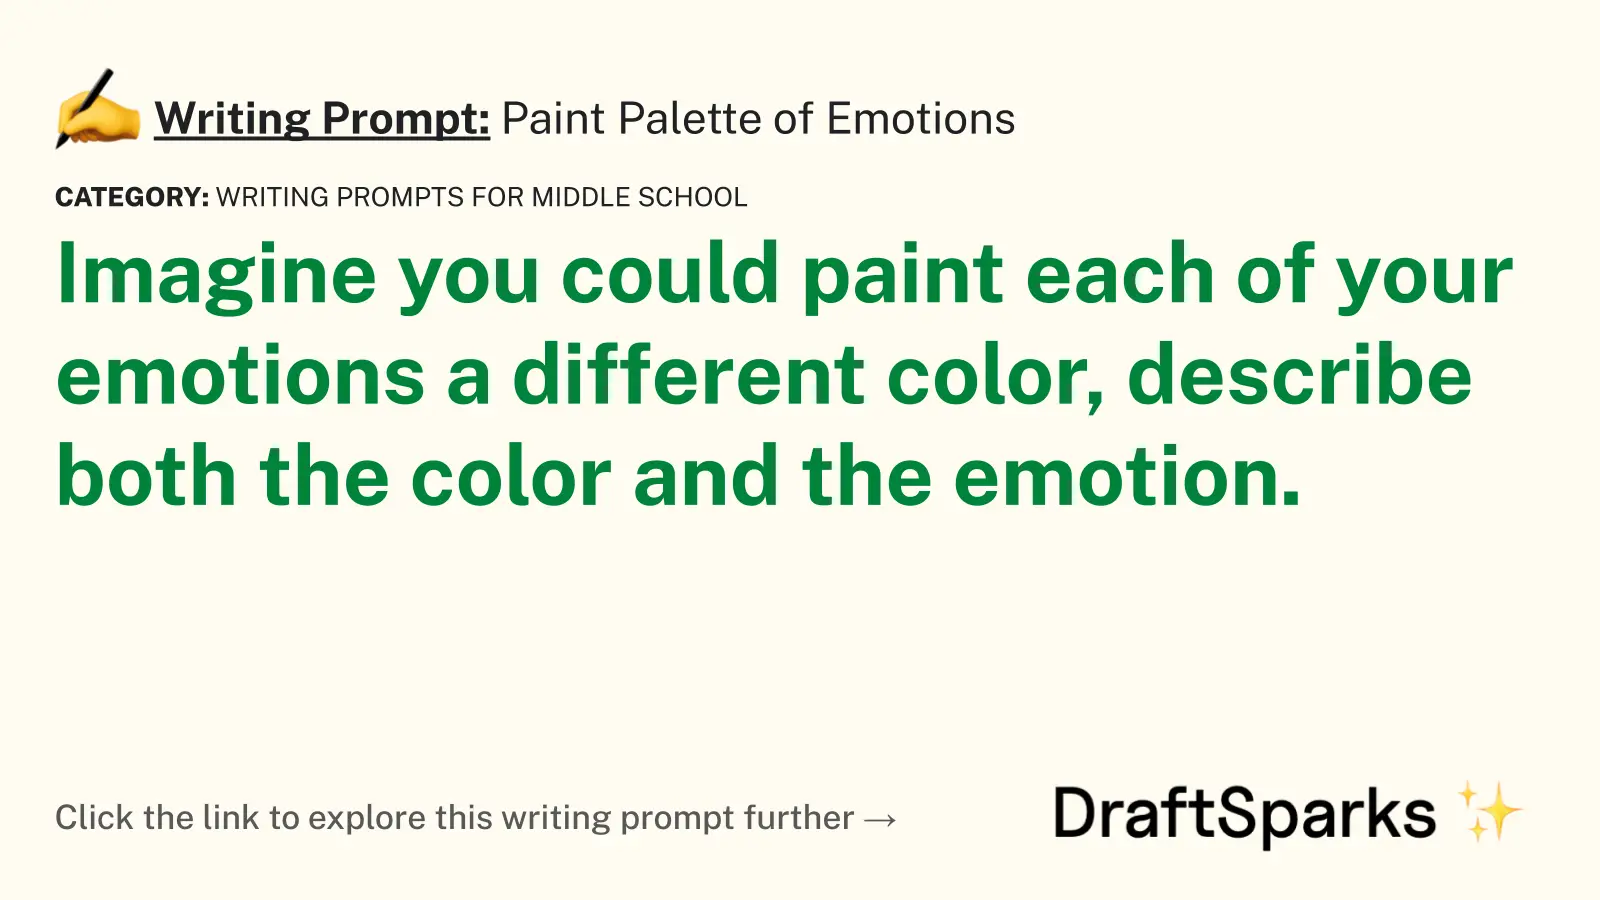 Paint Palette of Emotions